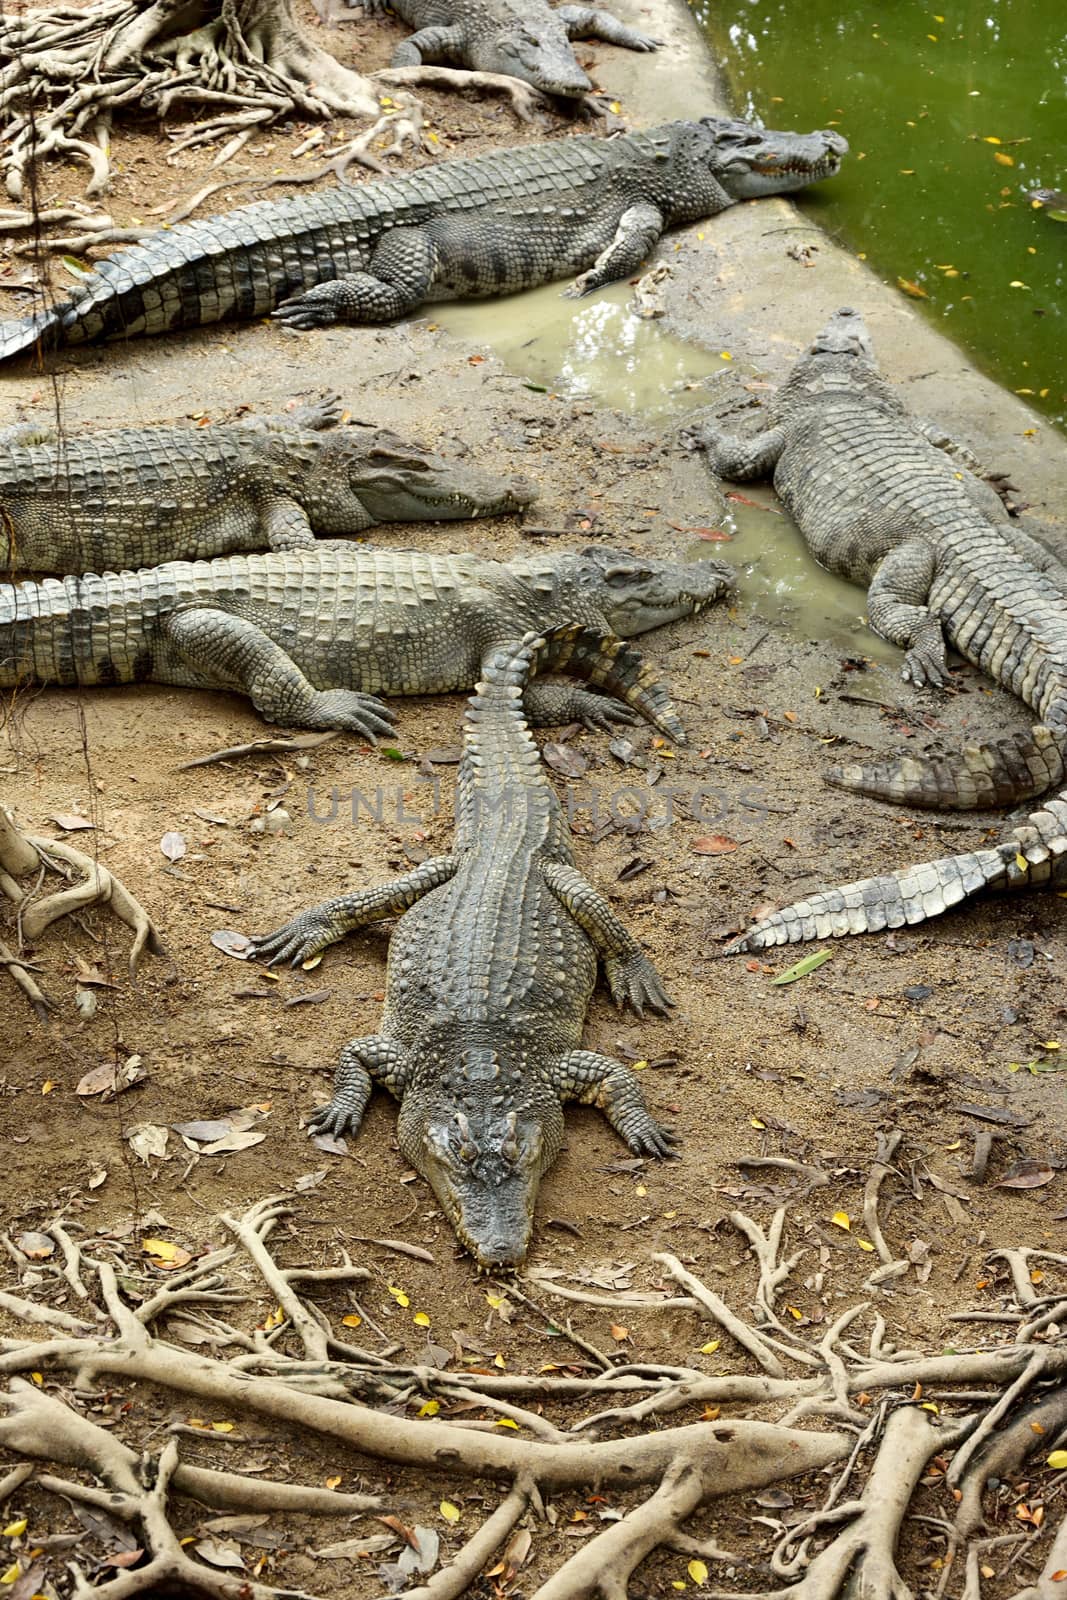 Sleeping crocodiles on crocodile farm, Thailand by think4photop